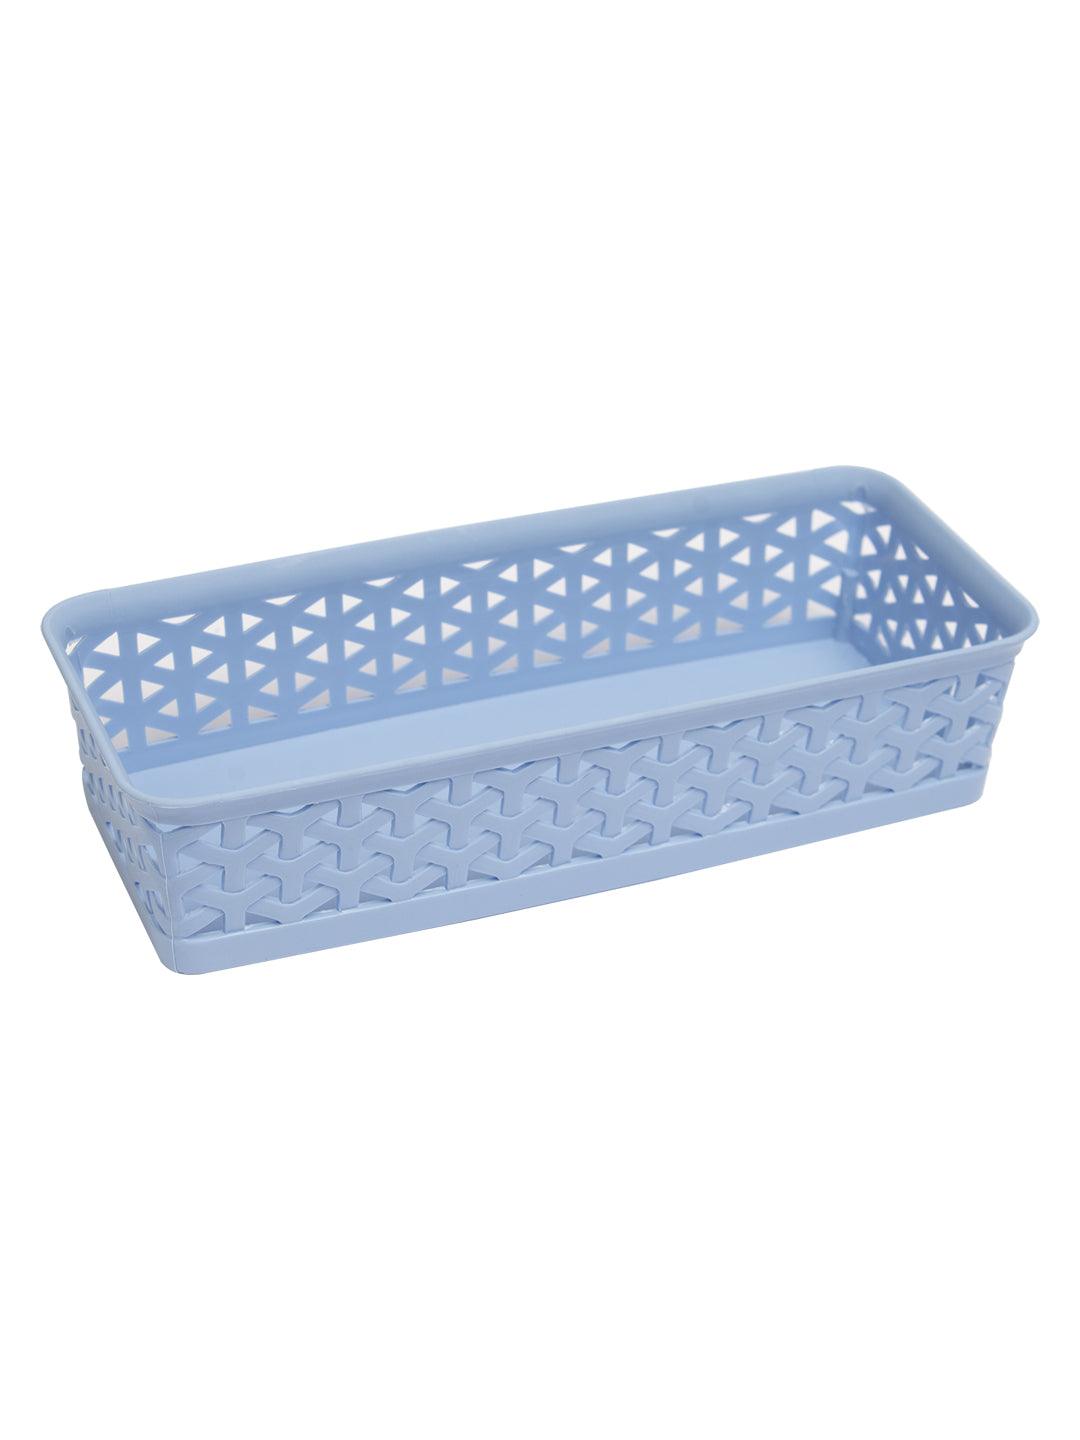 Market 99 Small Plastic Multipurpose Storage Basket ( Set Of 6, Solid Light Blue Colour) - MARKET 99